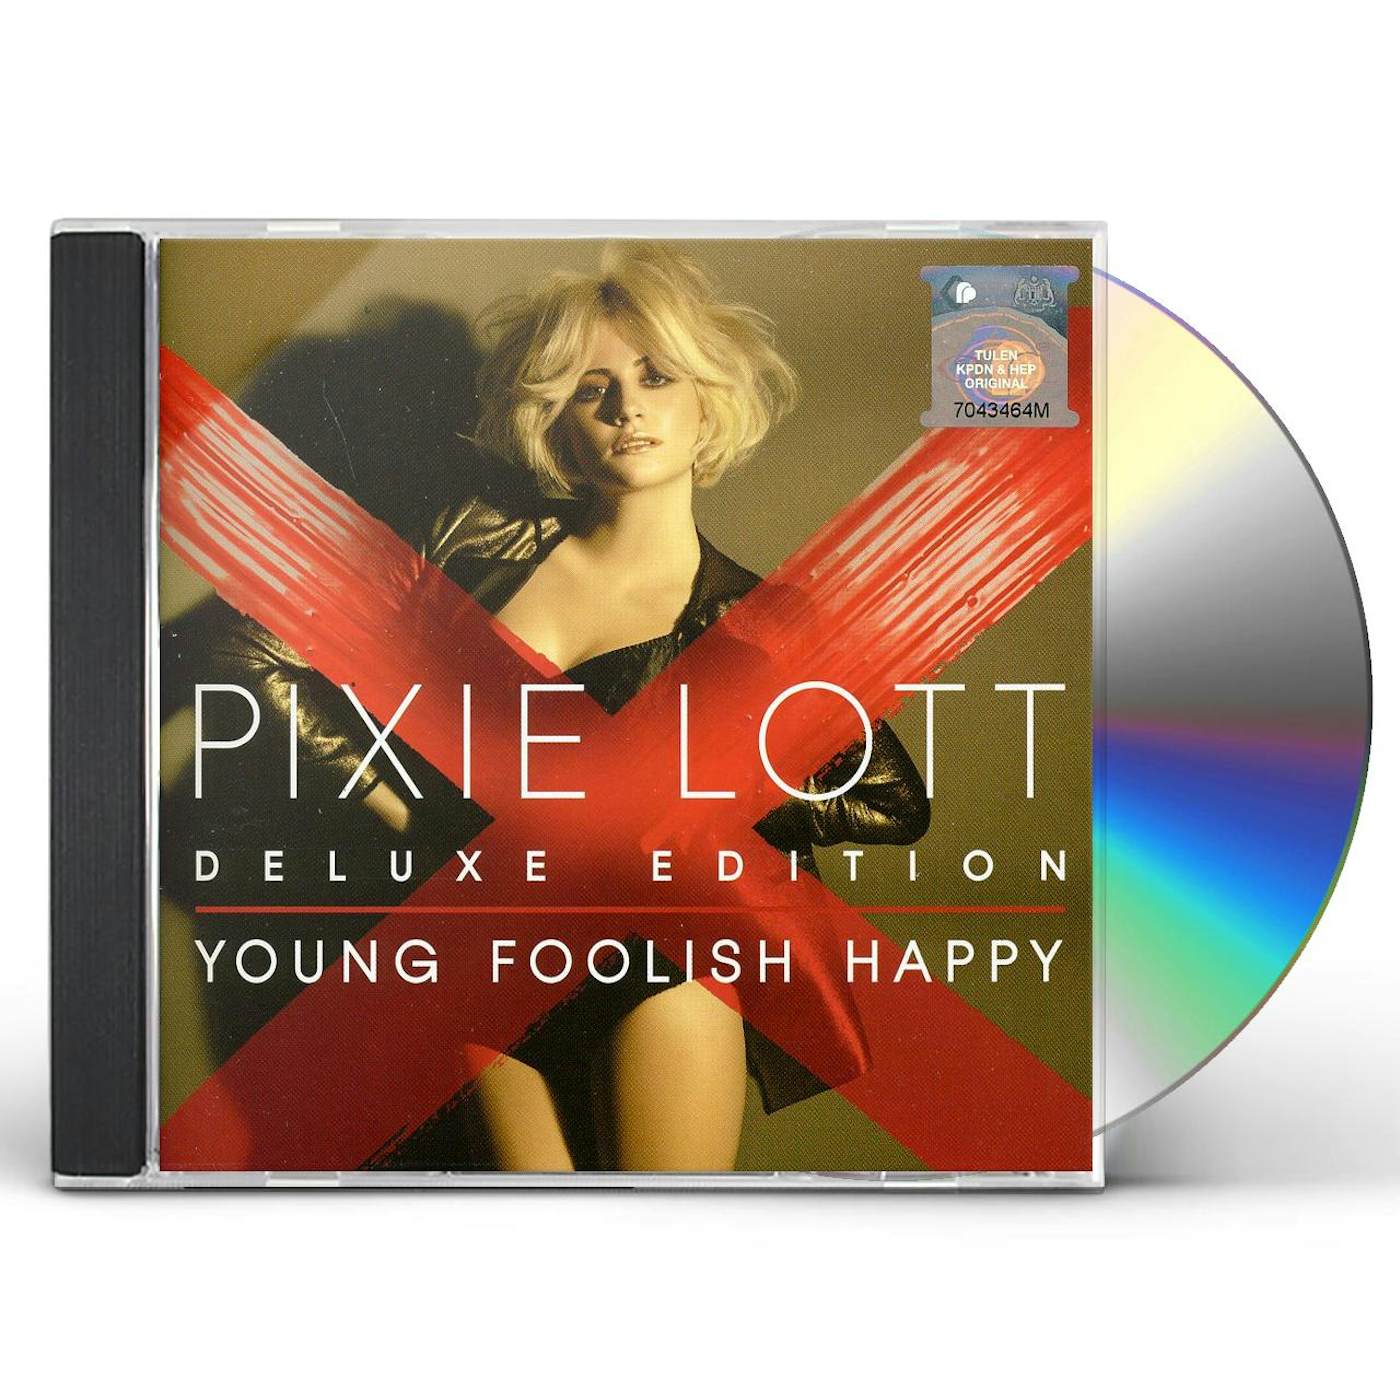 Pixie Lott YOUNG FOOLISH HAPPY CD